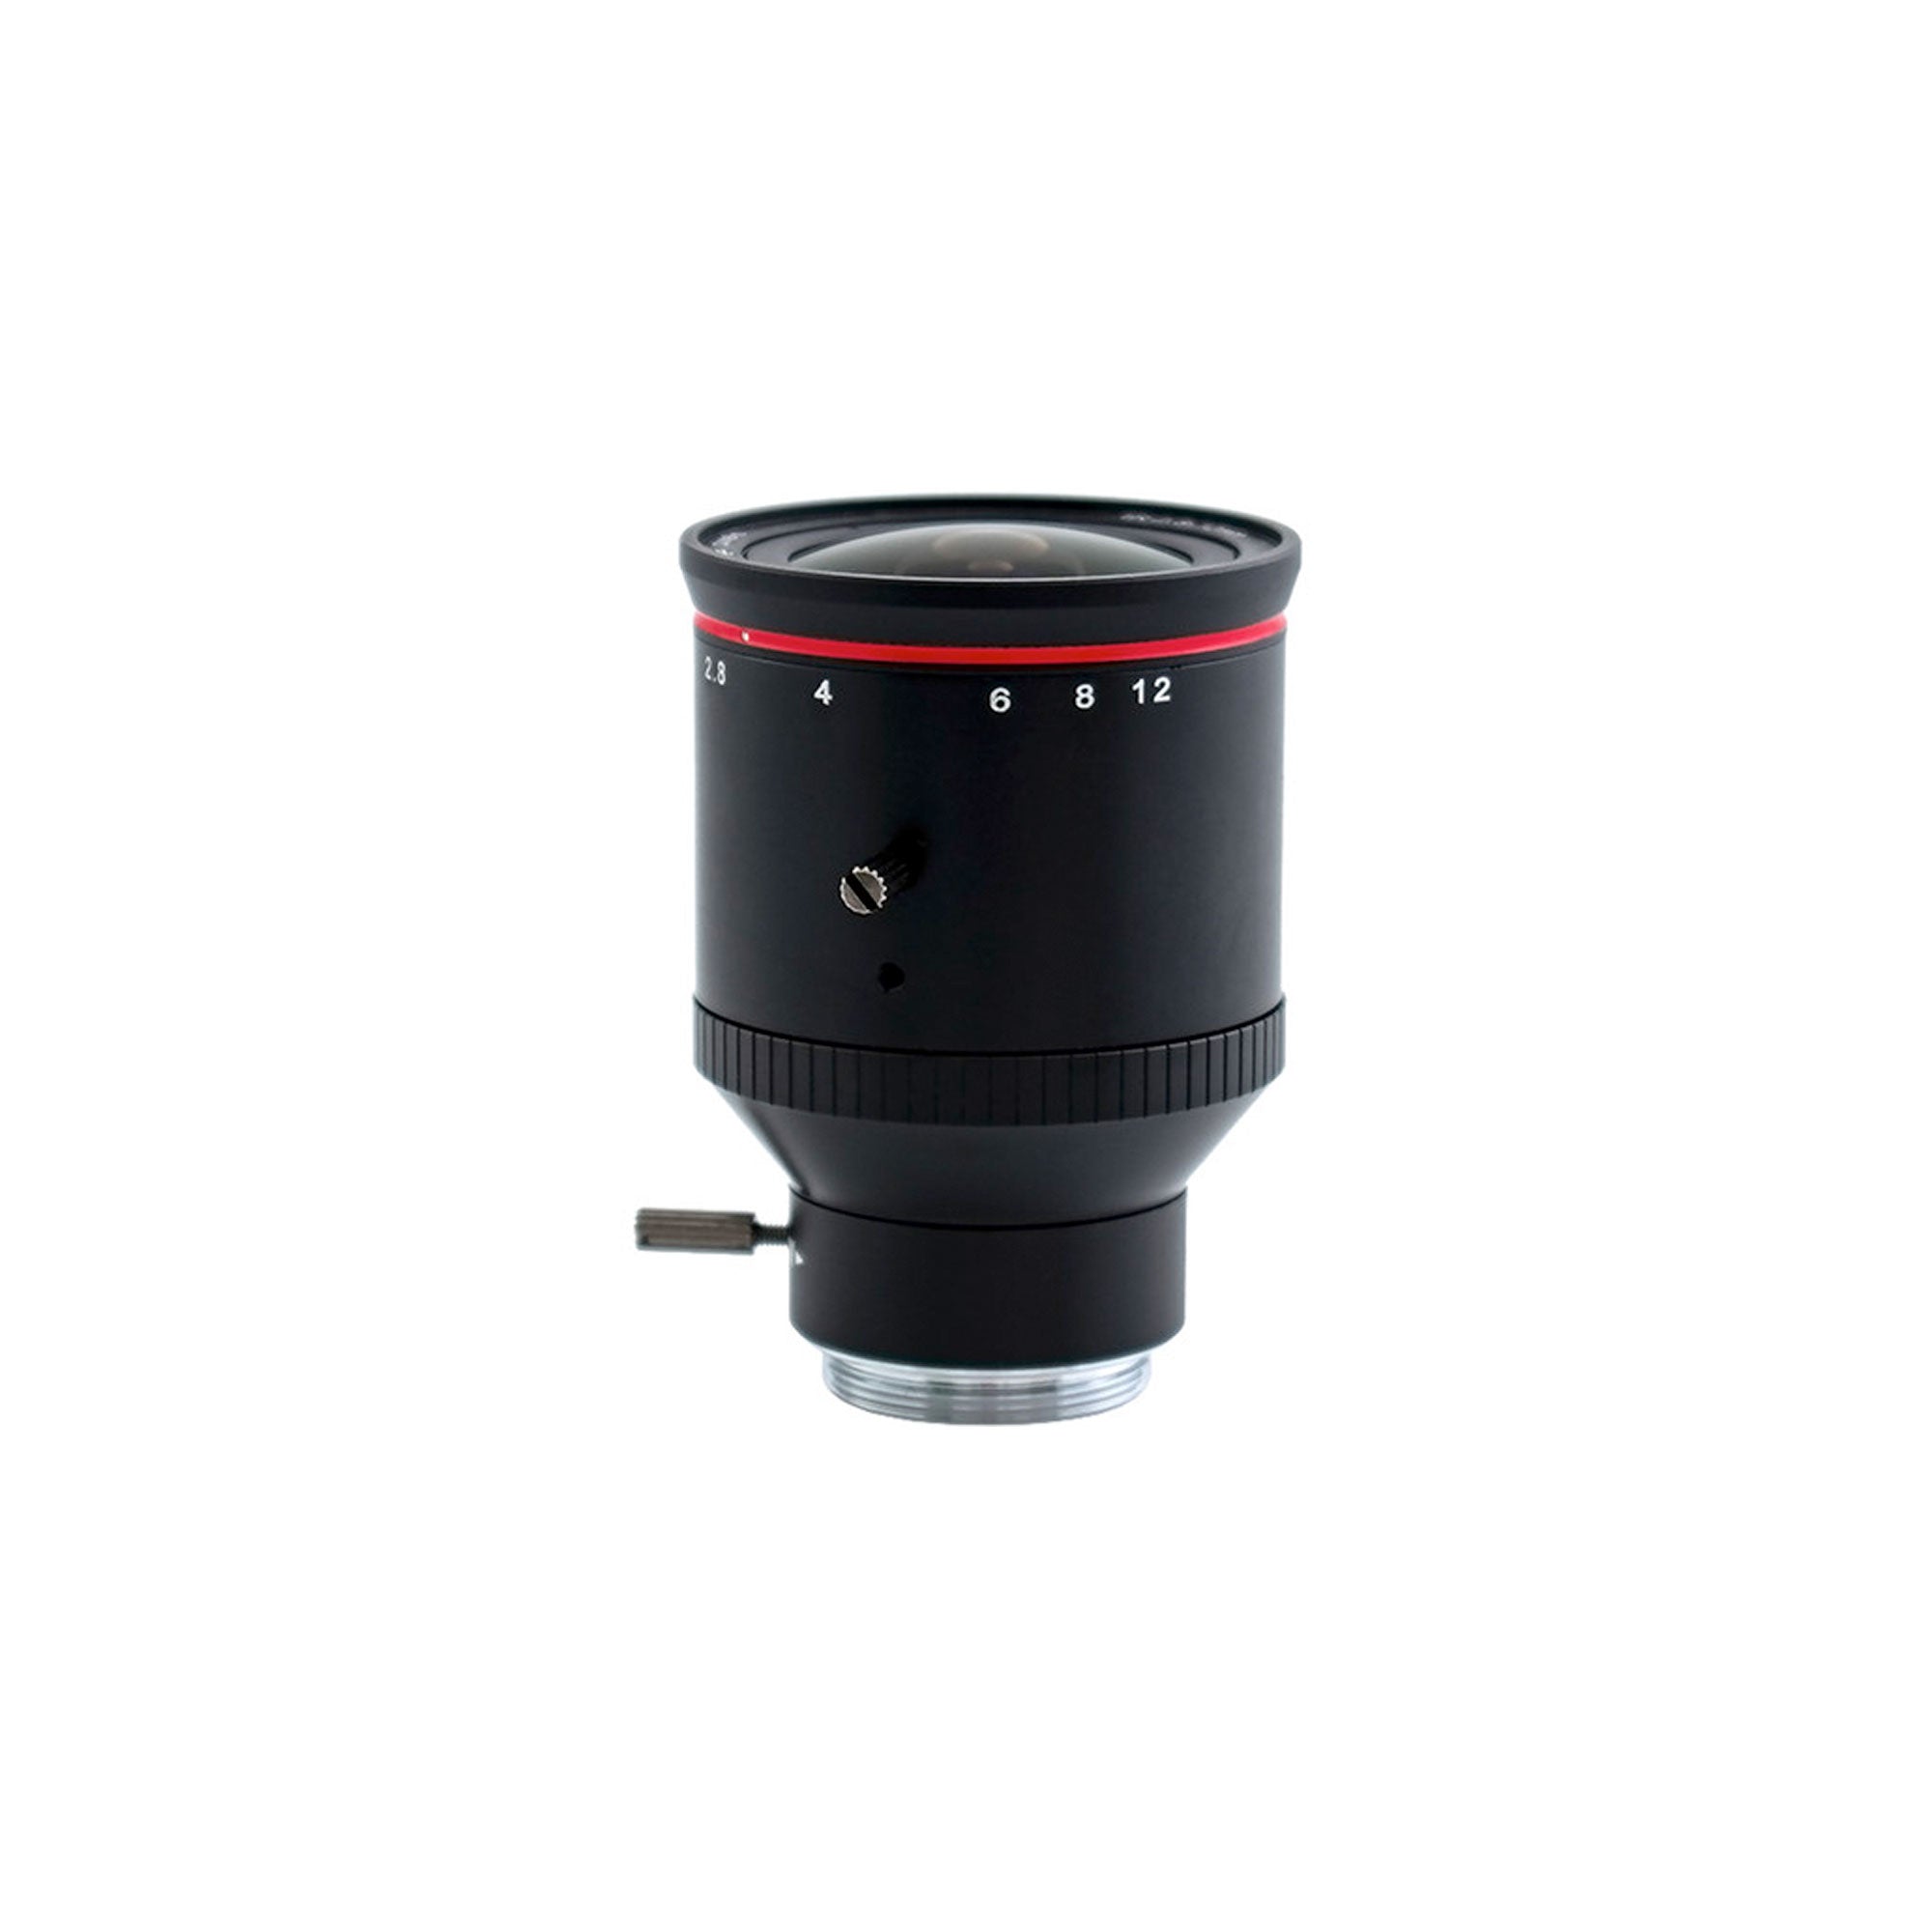 AIDA Imaging CS-Mount 2.8-12mm Varifocal 3 Megapixel Lens